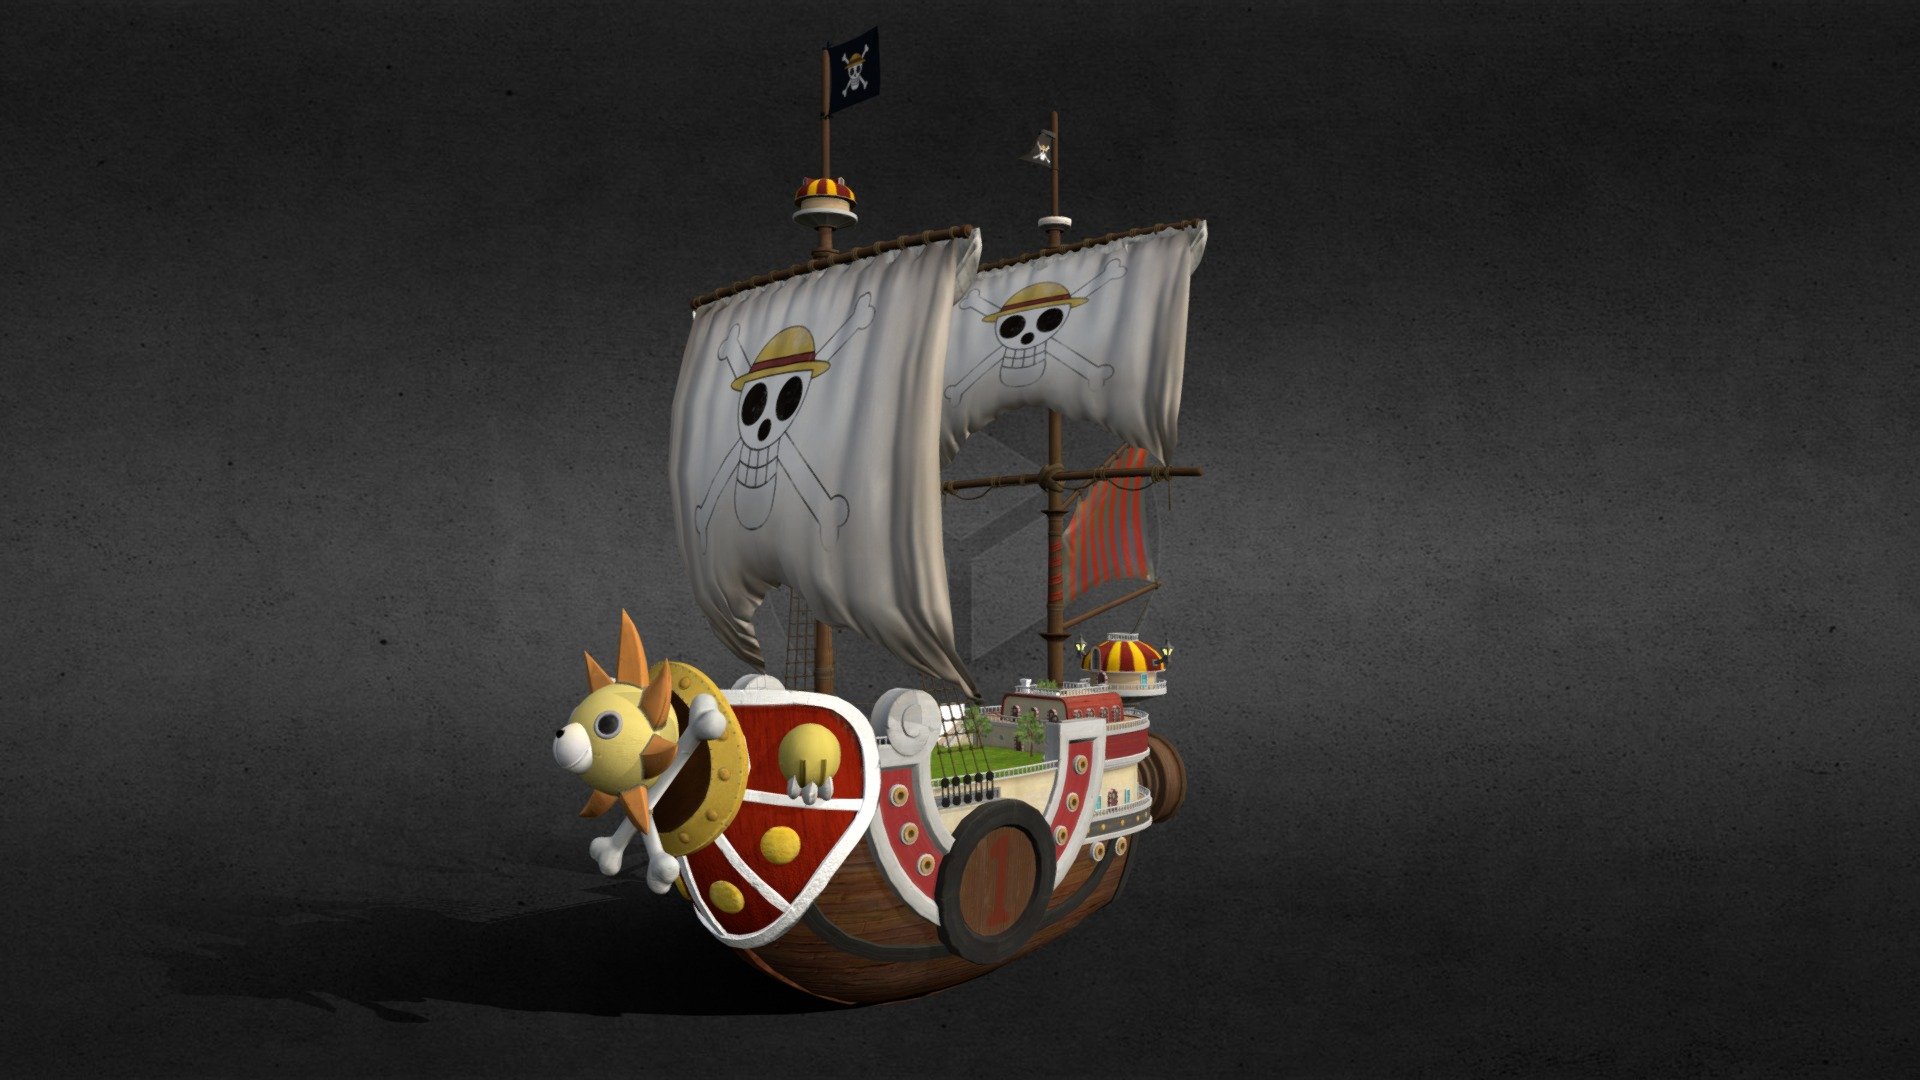 Thousand Sunny One Piece go Sailing | Mounted Print